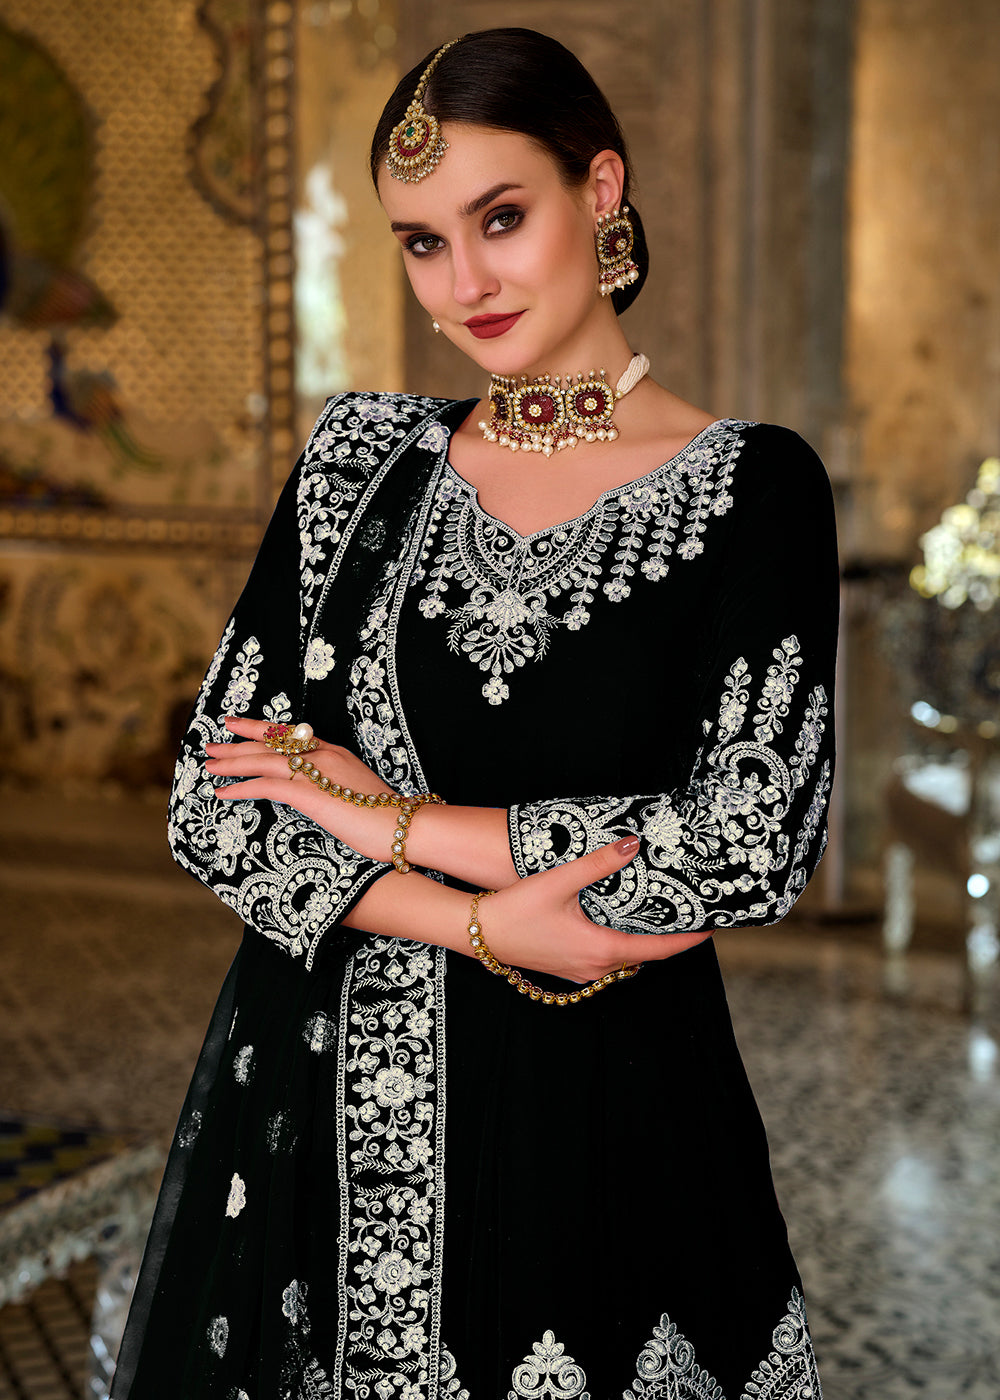 Buy Now Miraculous Black Sequin Embroidered Trendy Velvet Anarkali Dress Online in USA, UK, Australia, New Zealand, Canada, Australia & Worldwide at Empress Clothing.